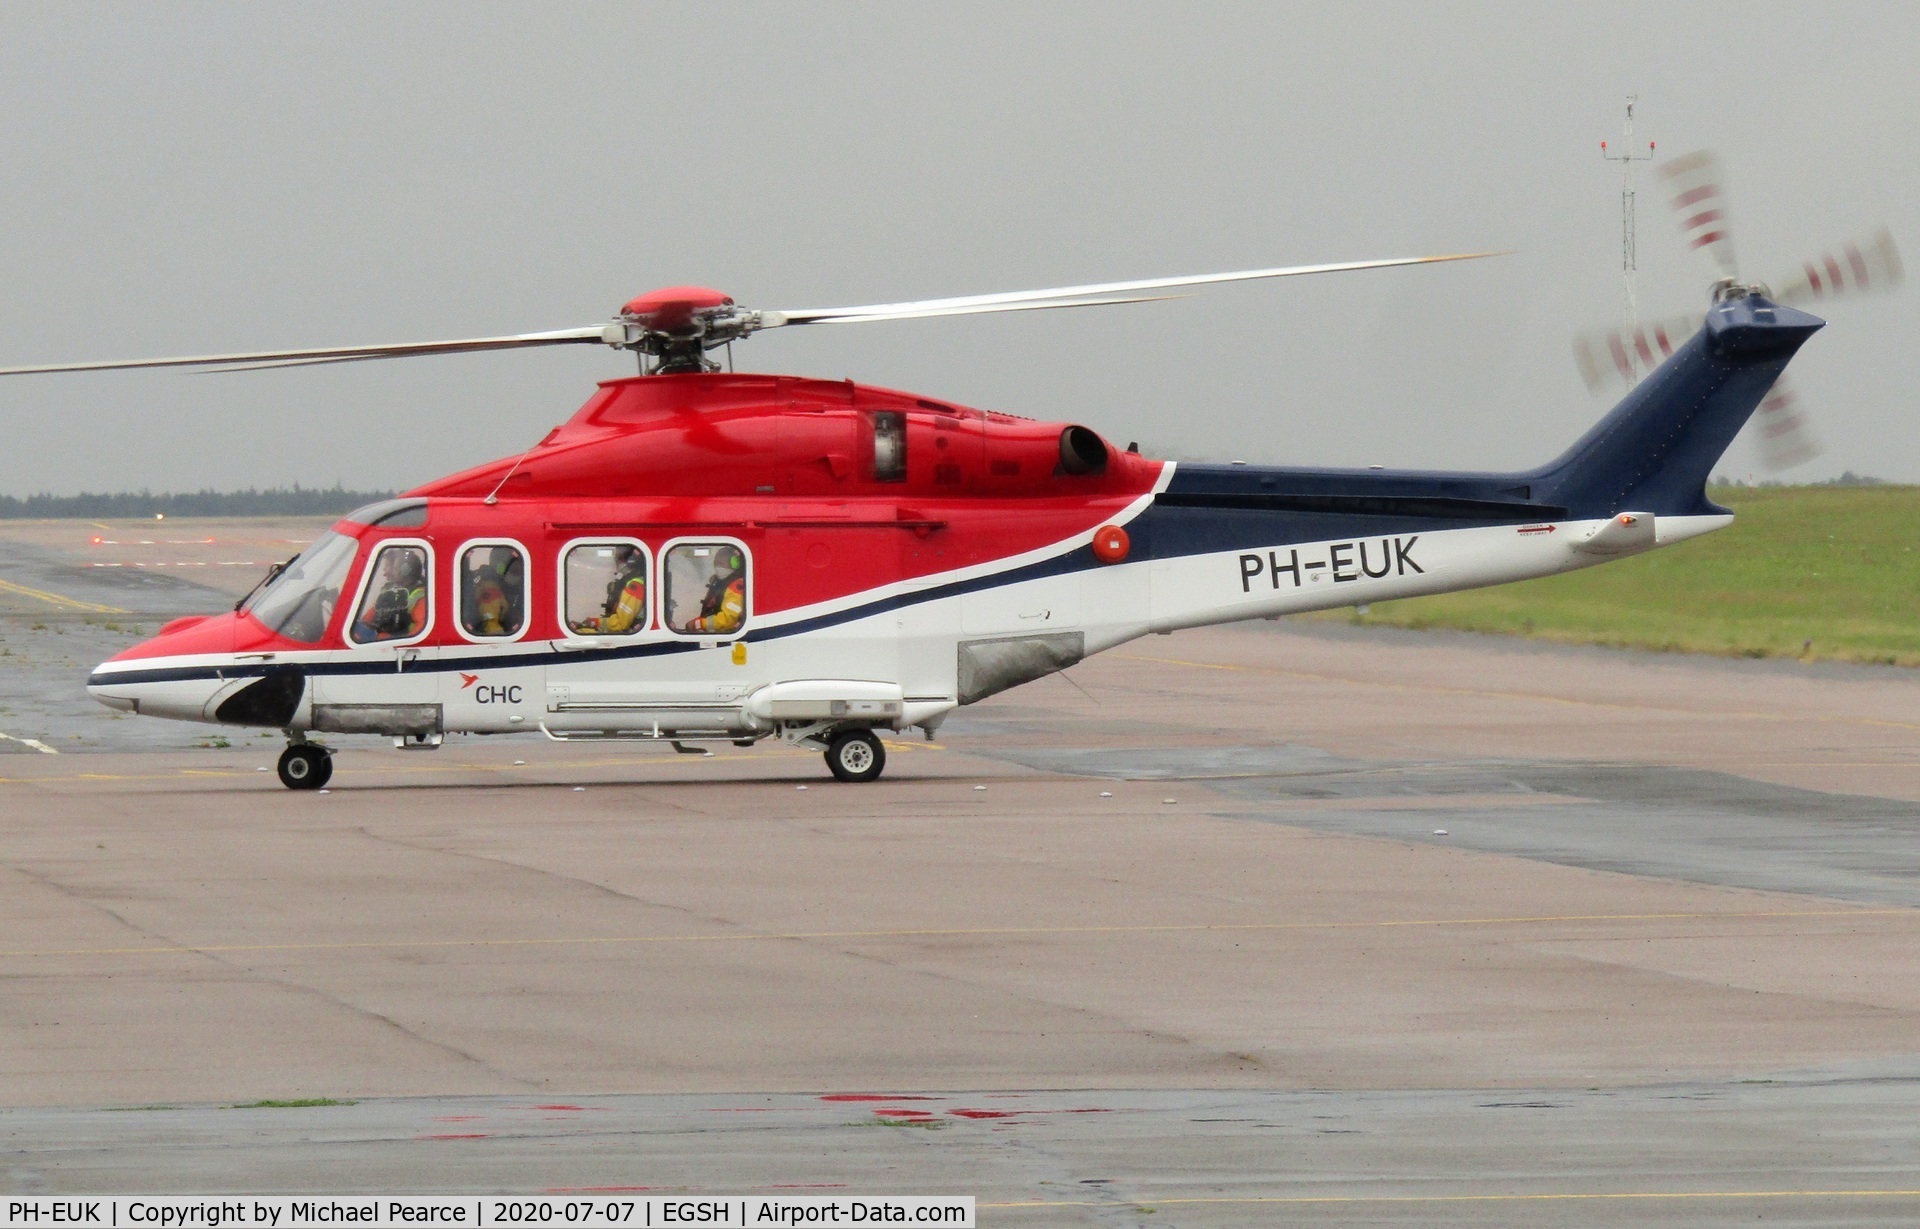 PH-EUK, 2013 AgustaWestland AW-139 C/N 31474, Arriving from a North Sea gas platform.